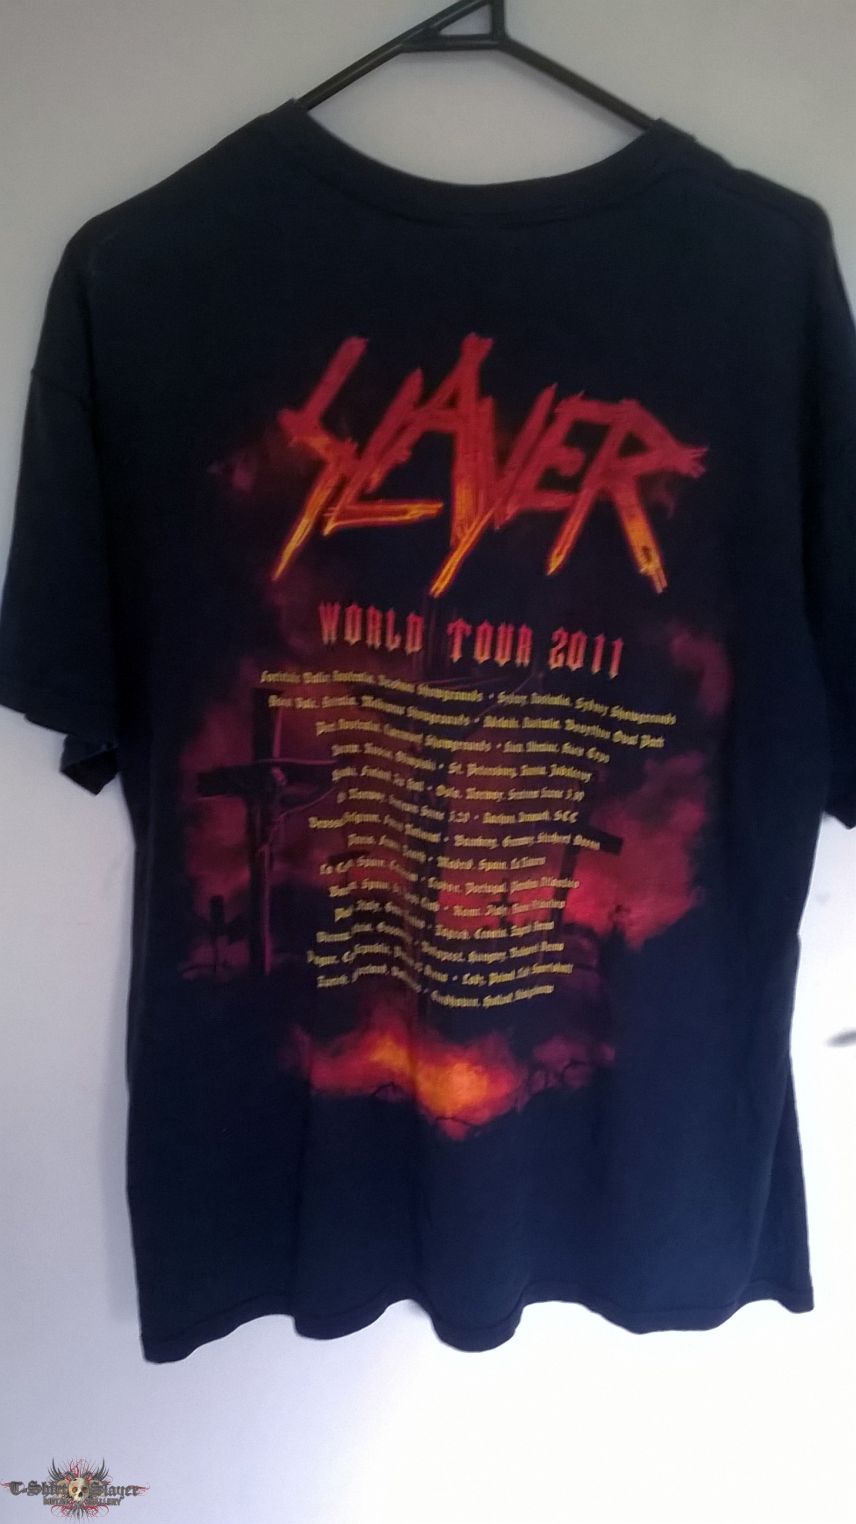 Slayer - World Tour 2011 T